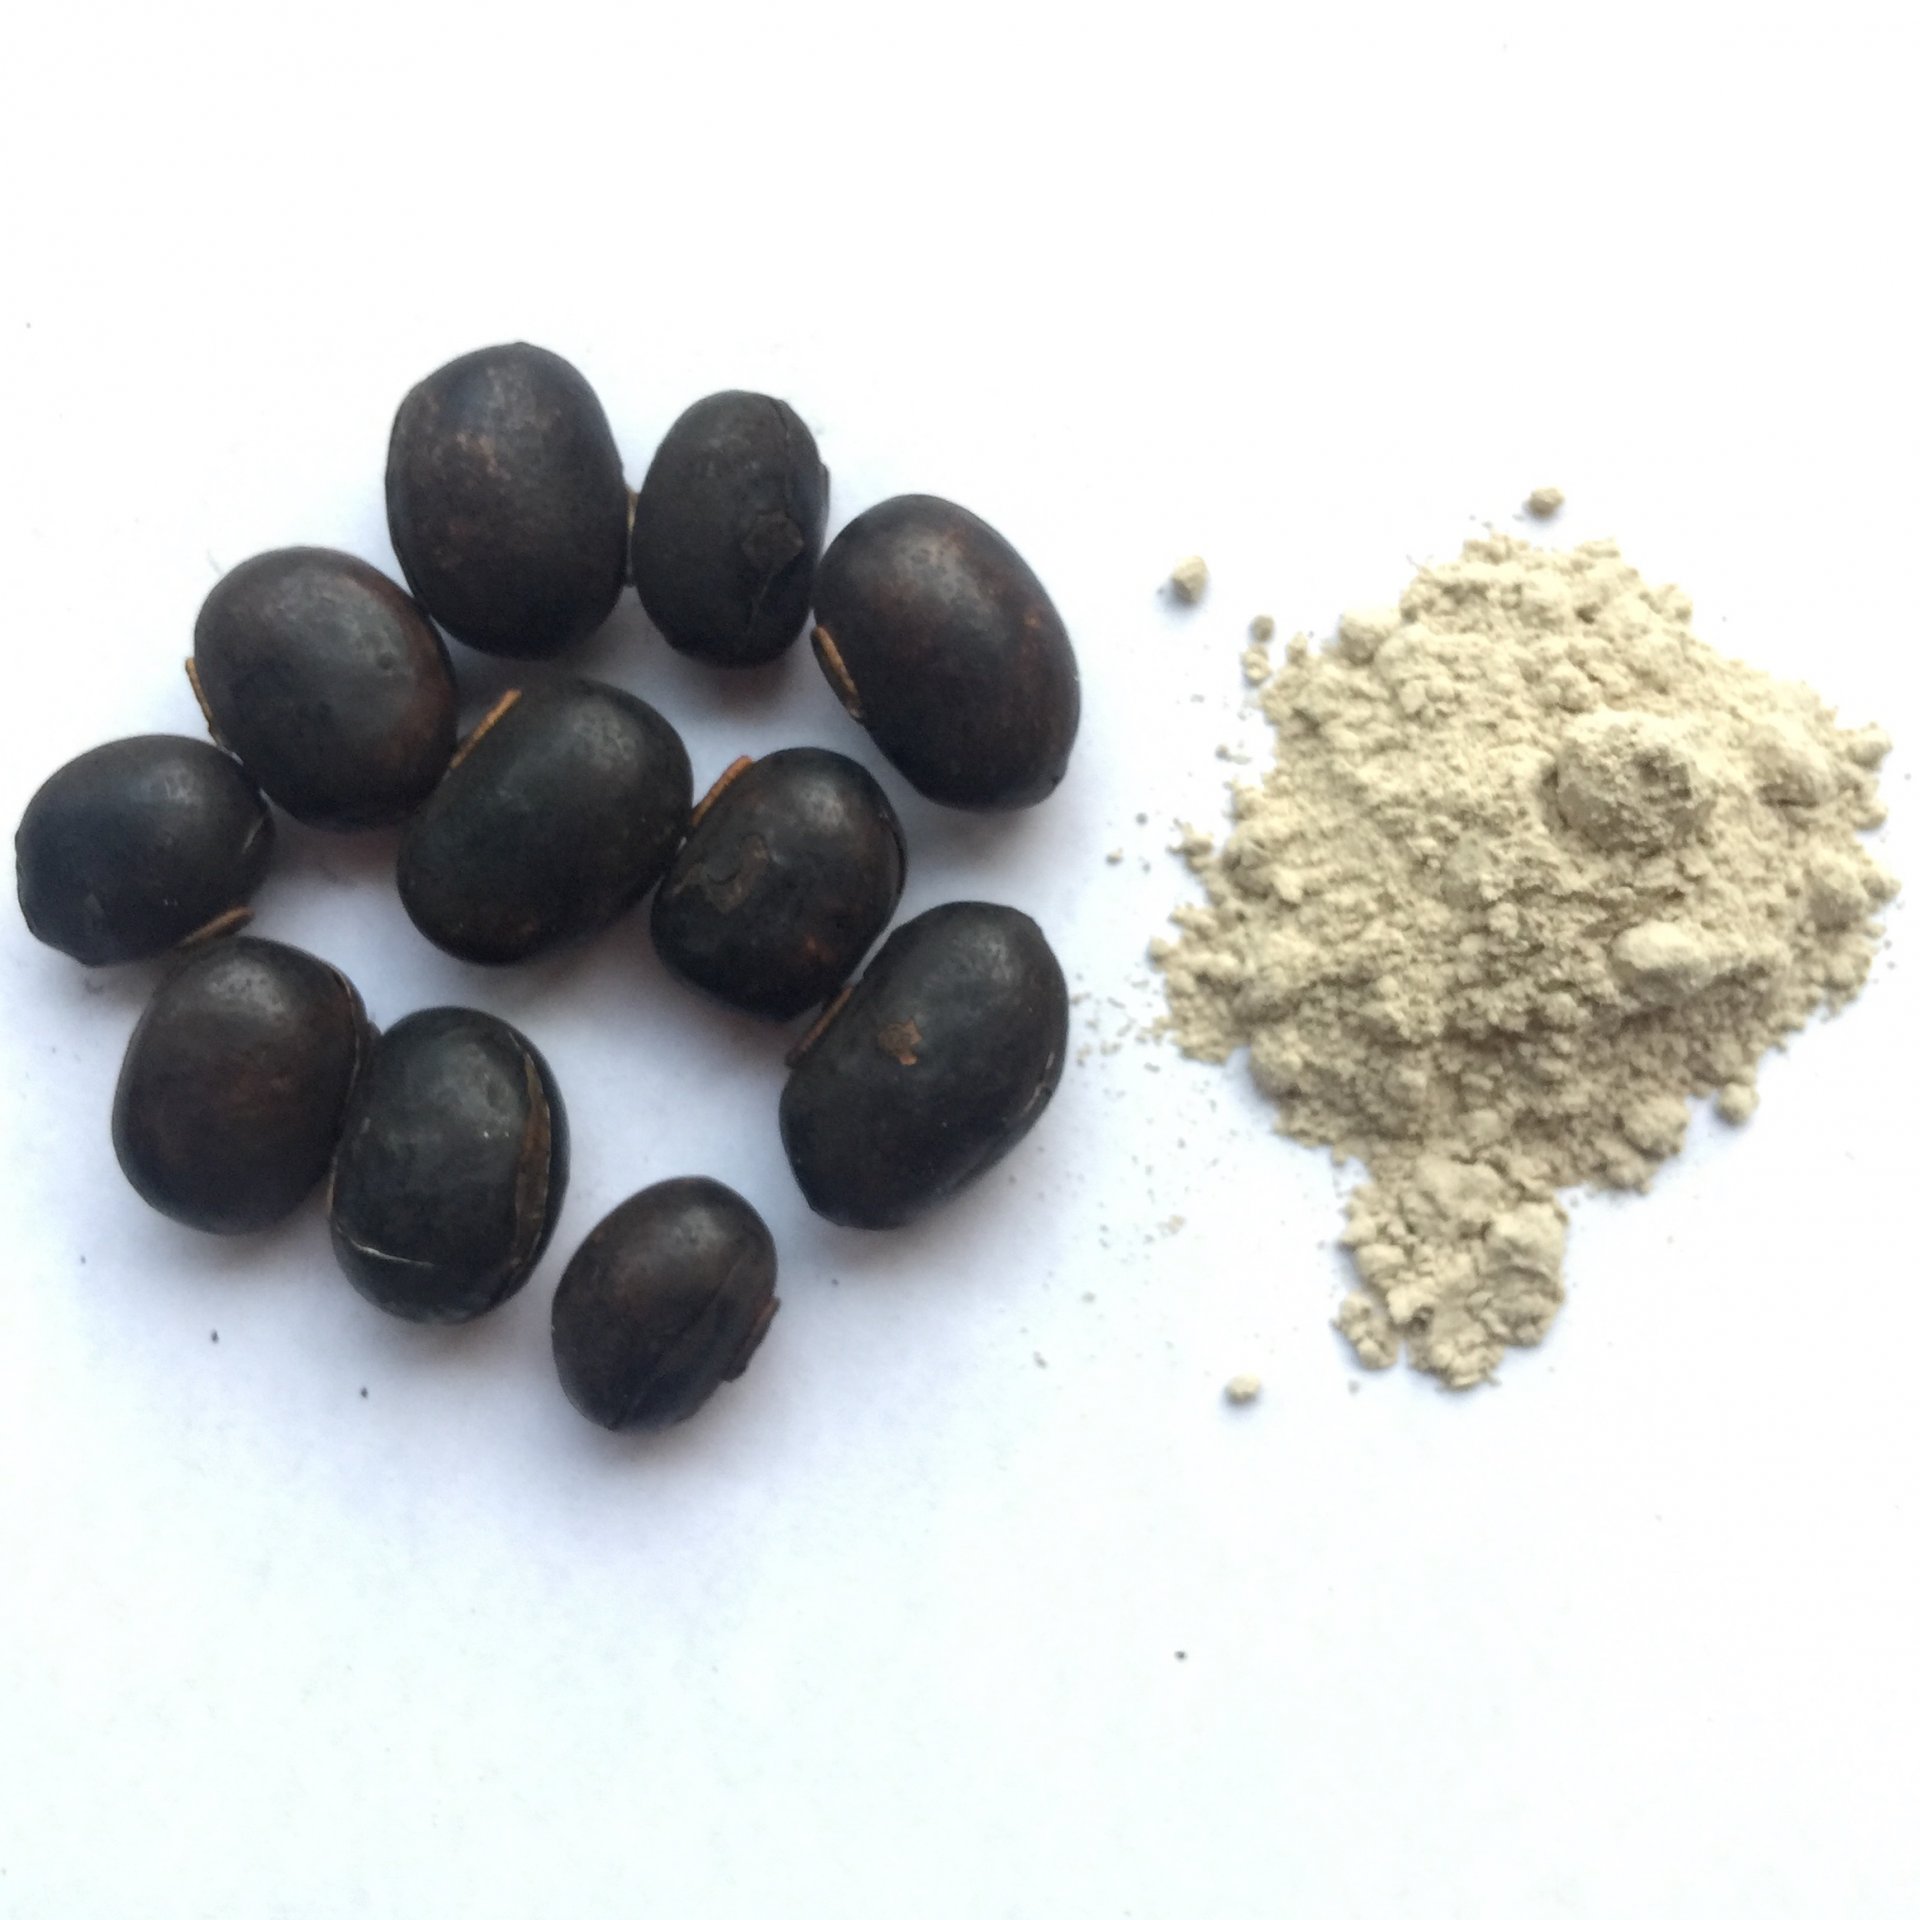 Mucuna Pruriens Seed Powder 1kg